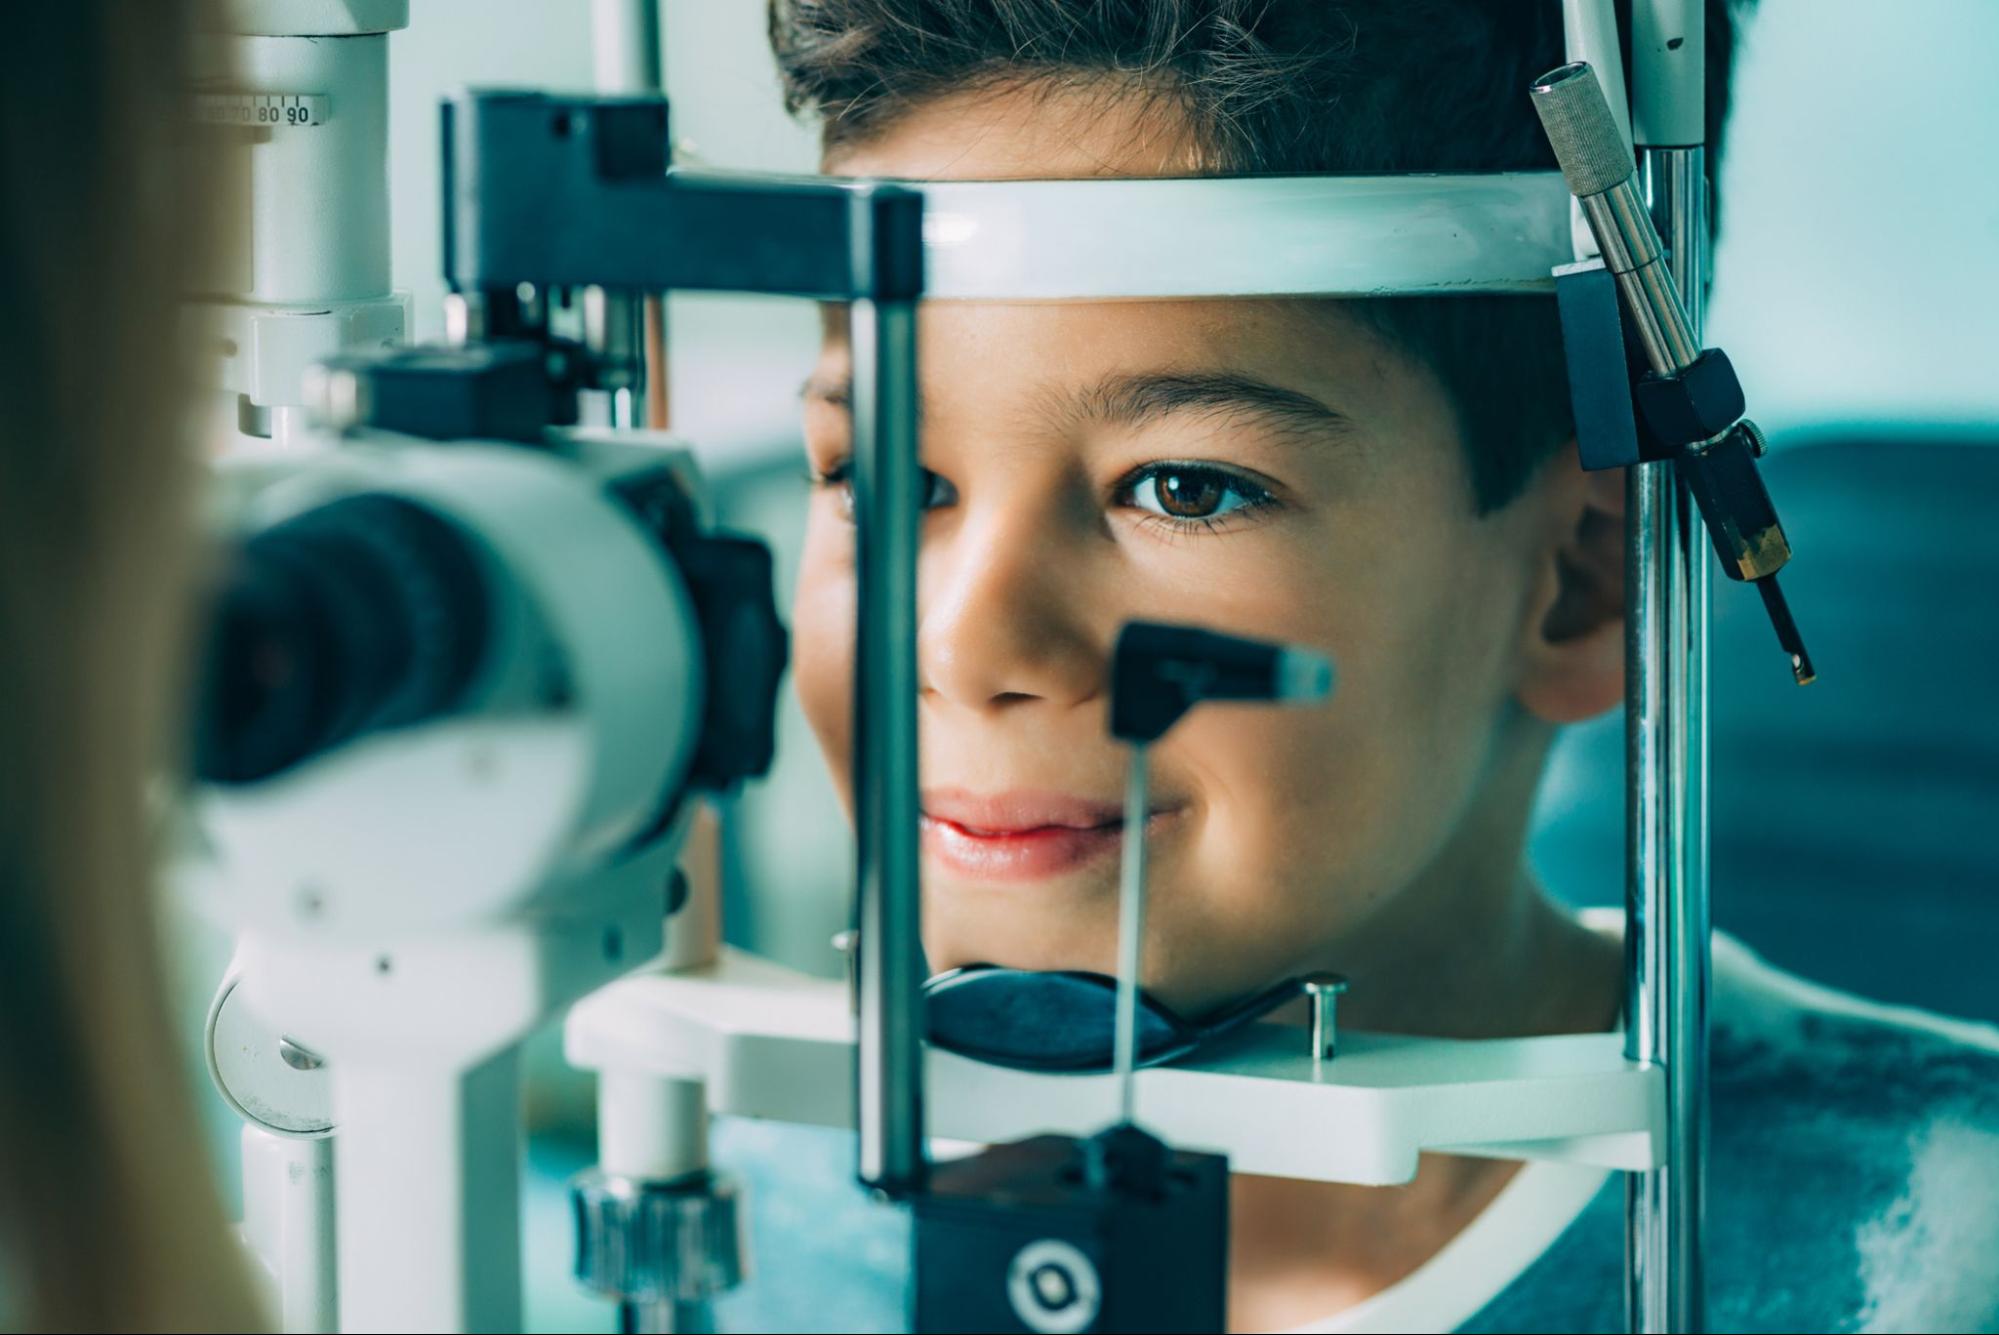 child receiving eye exam